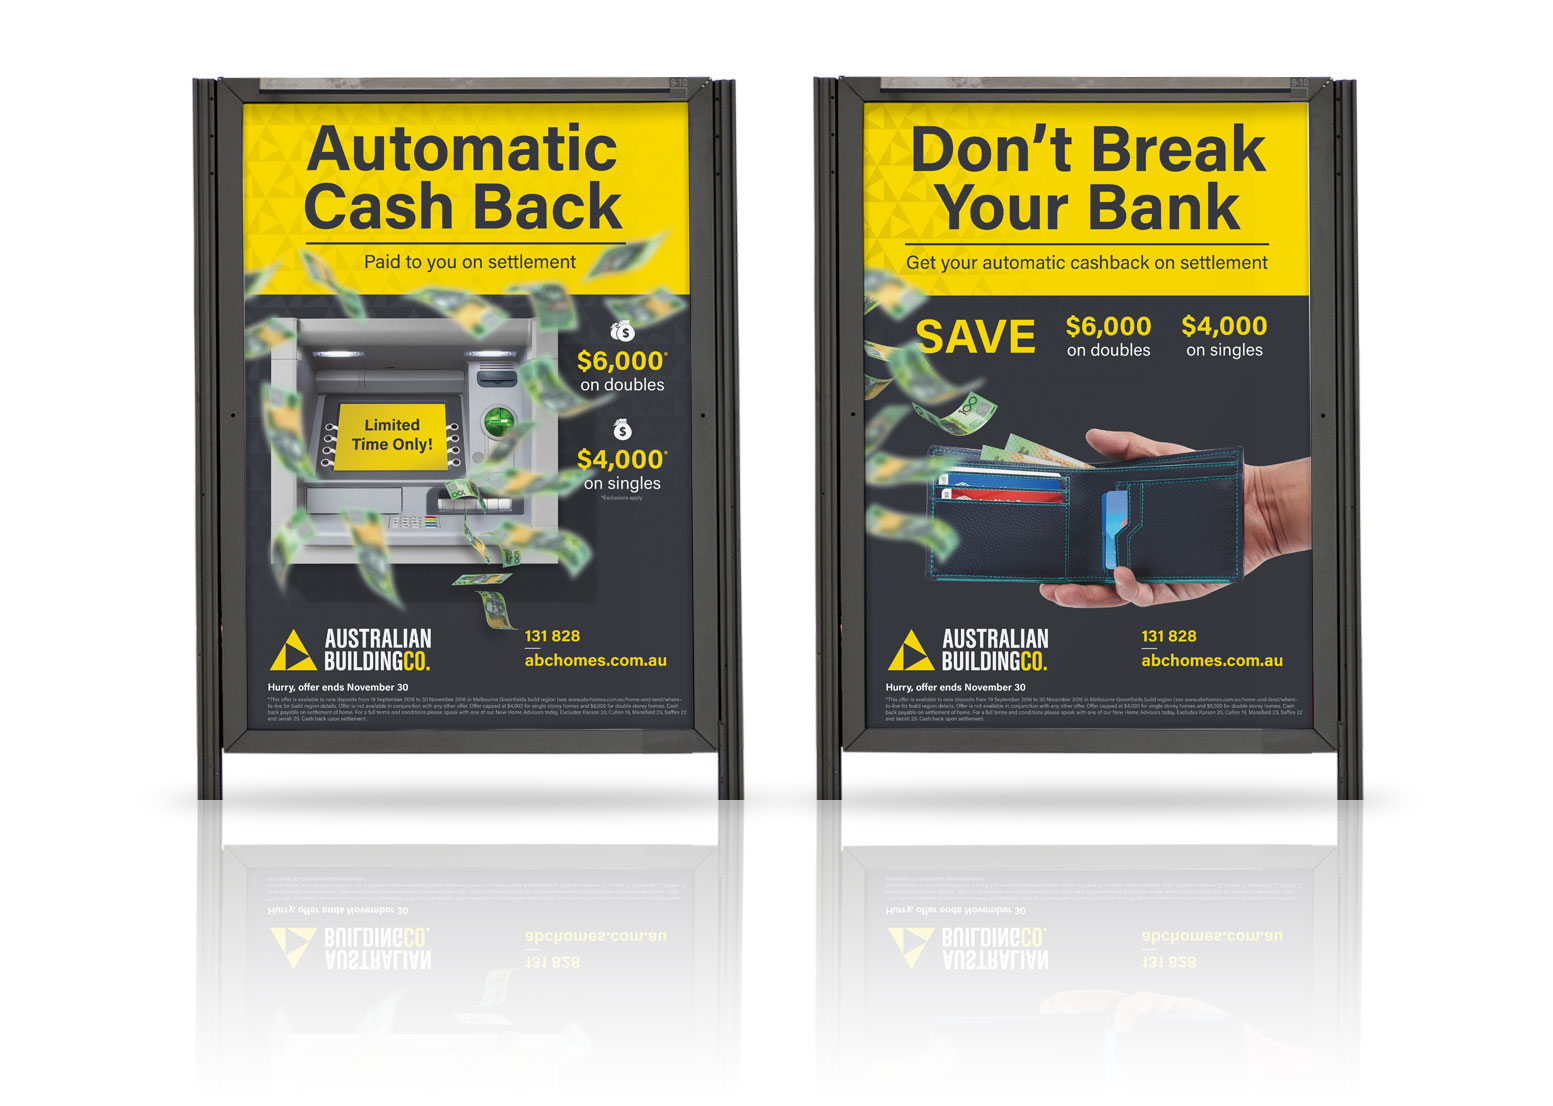 Australian Building Company - Campaign: Automatic Cash Back | Point of Sale